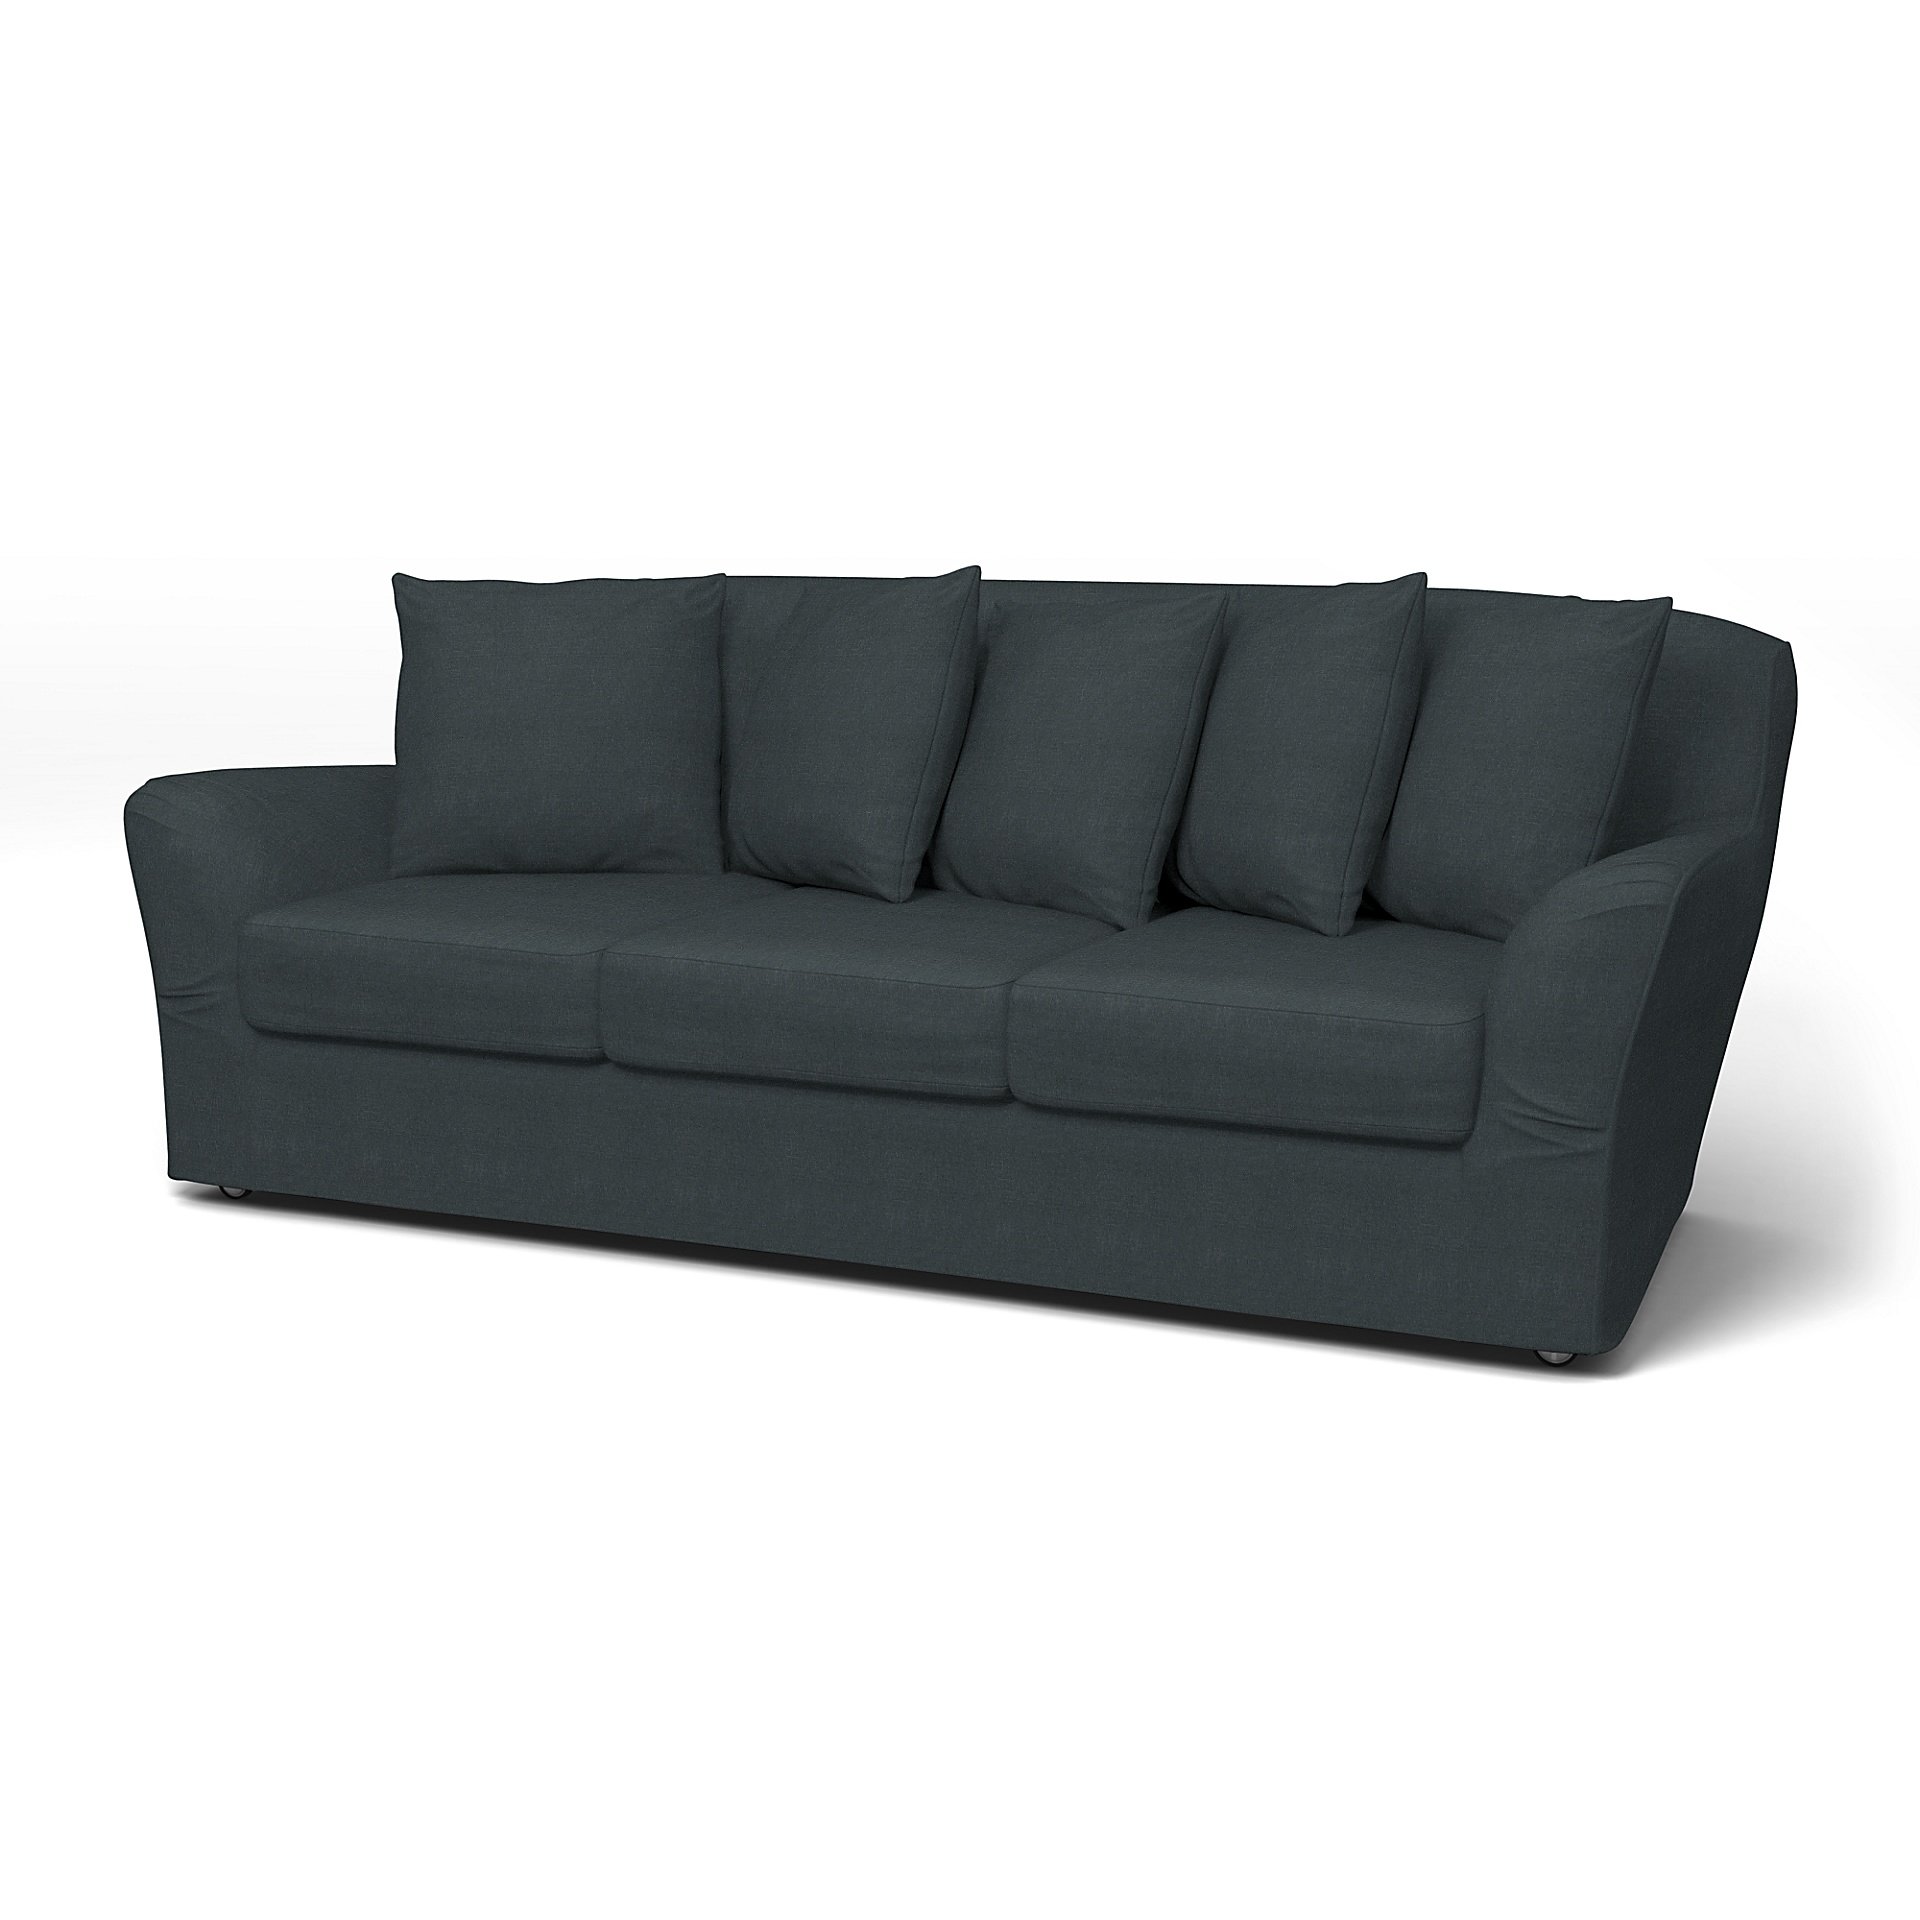 IKEA - Tomelilla 3 seater sofa, Graphite Grey, Linen - Bemz